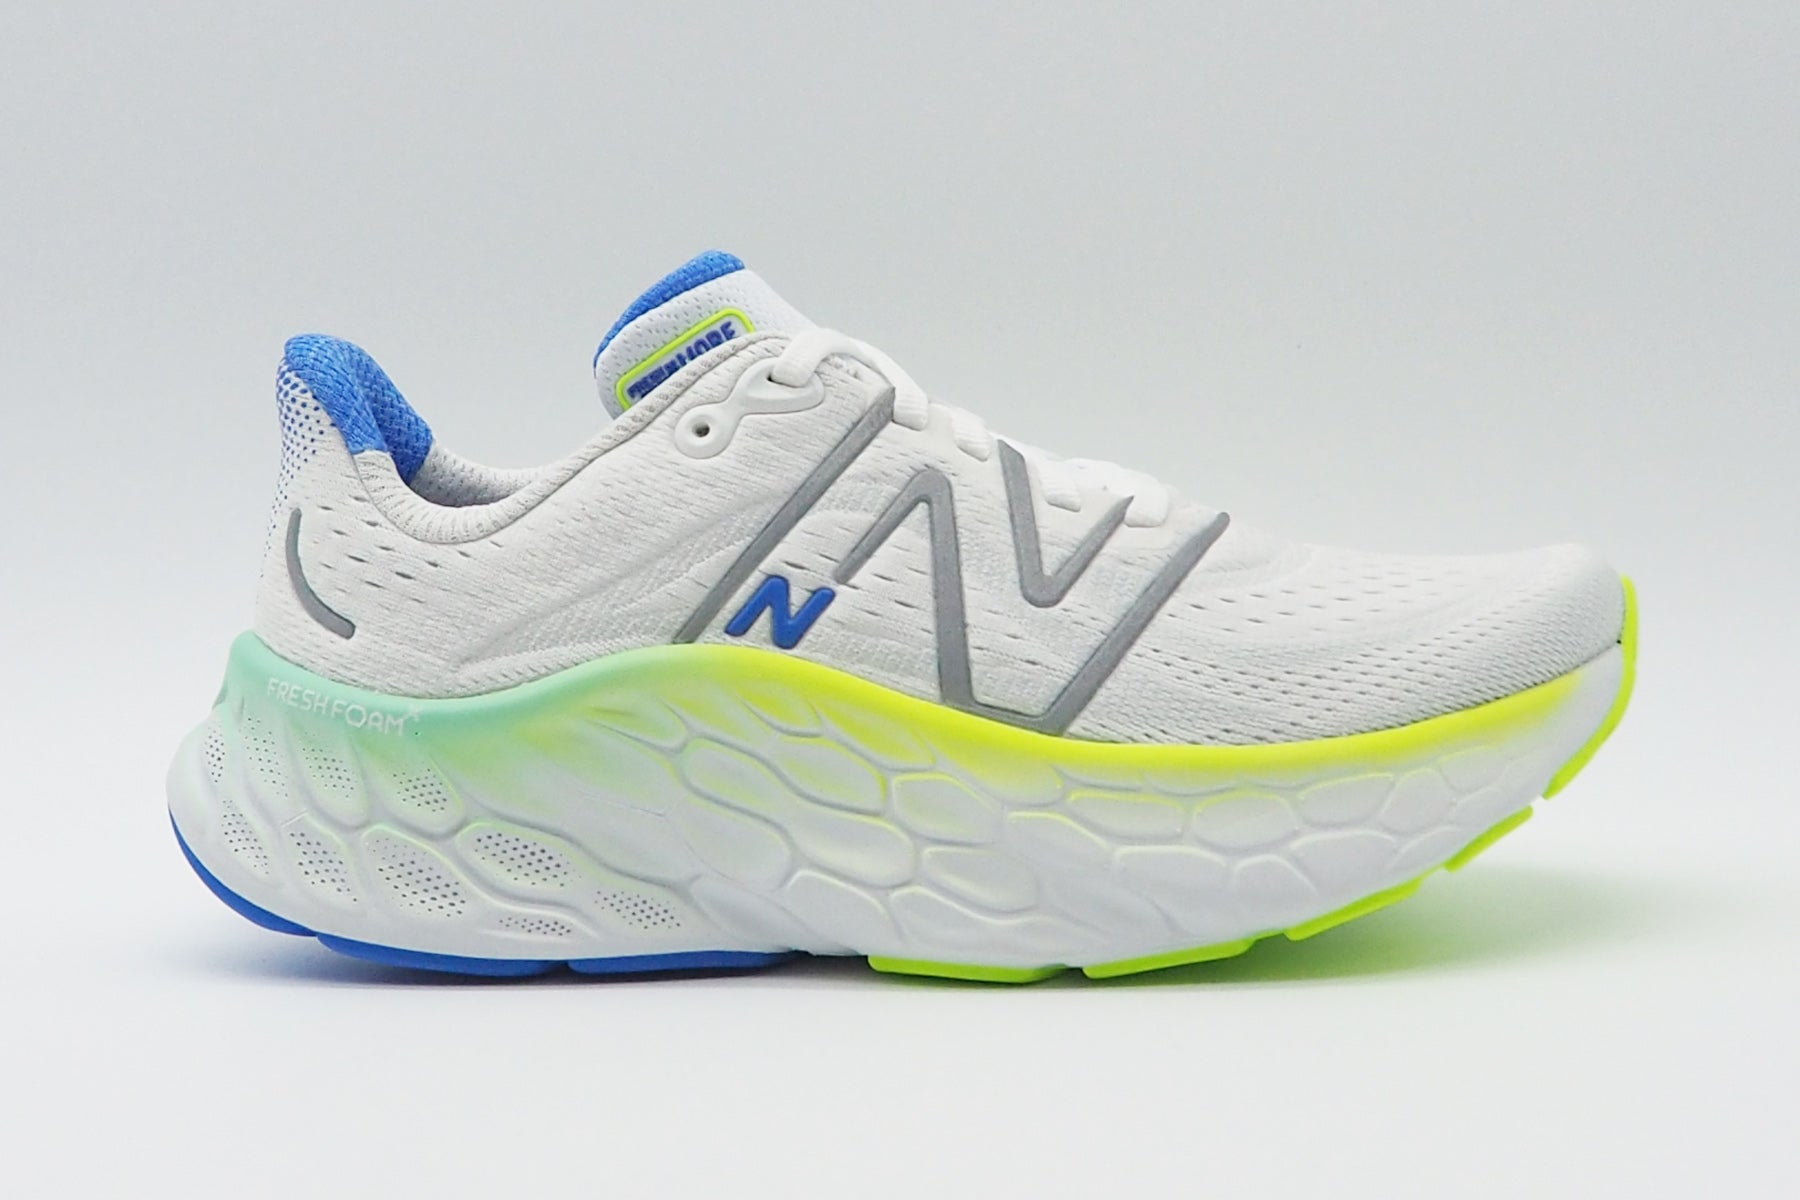 Damen Sneaker "Running Course" WMORWT4 aus Mesh in Weiß & Fluor-Neon Damen Sneaker New Balance 